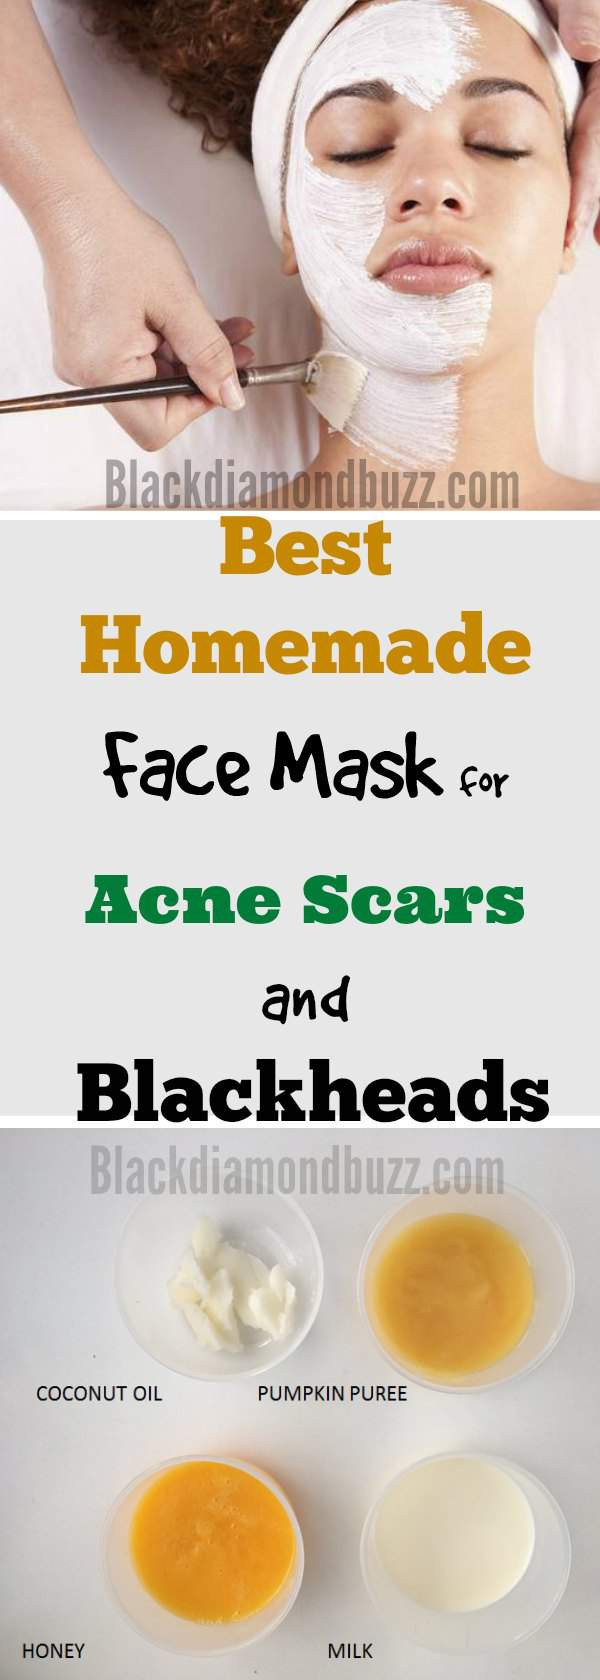 DIY Homemade Face Masks
 DIY Face Mask for Acne 7 Best Homemade Face Masks